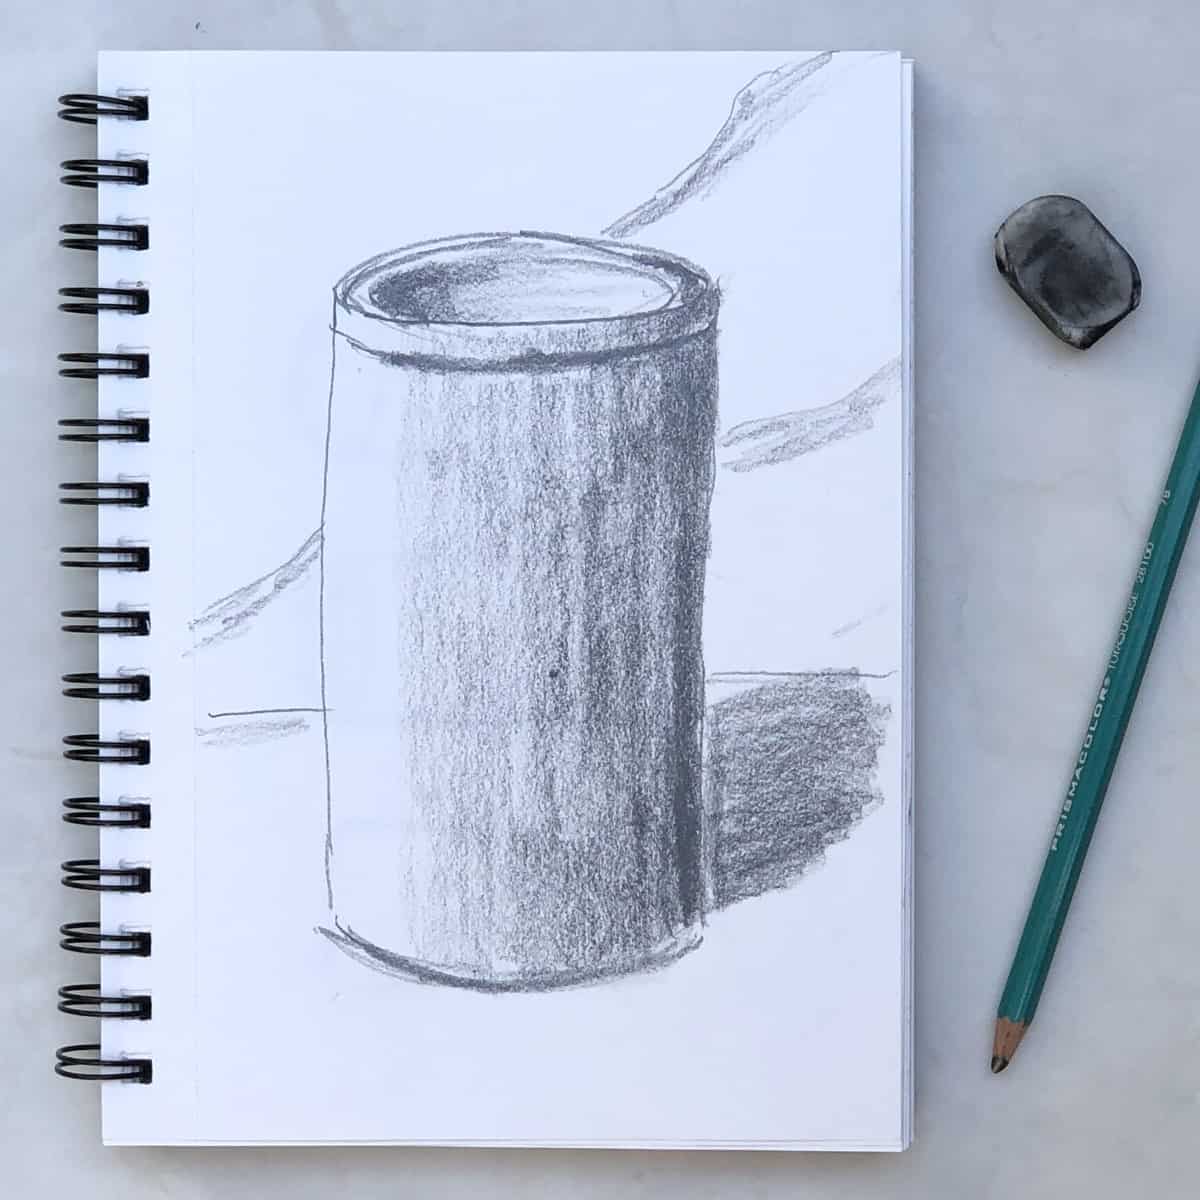 Cylinder drawn in pencil on sketchbook